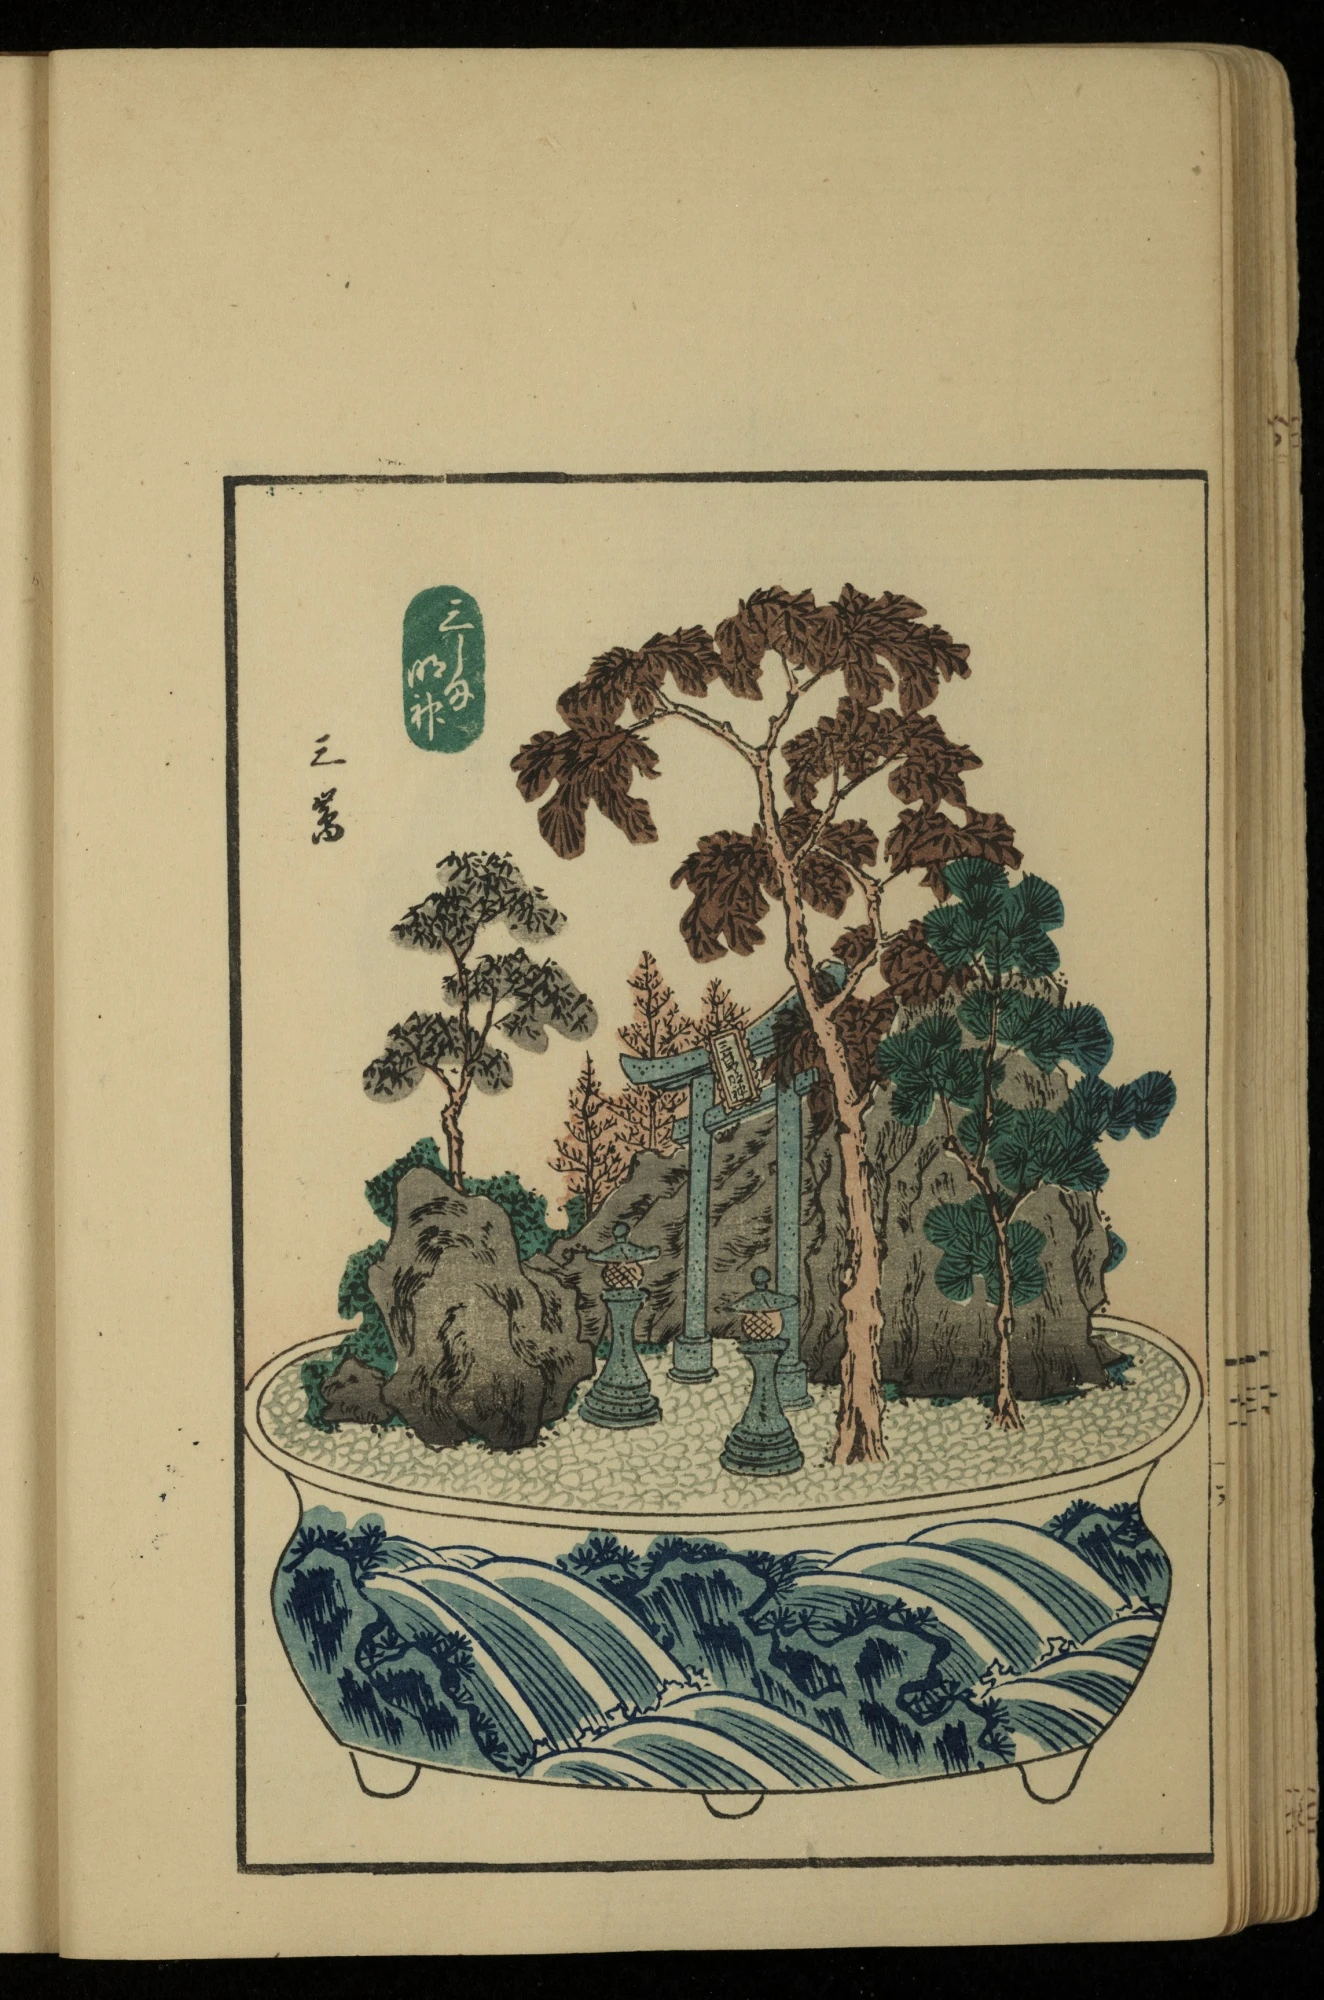 Utagawa Yoshishige, print from 53 Stations of the Tōkaidō as Potted Landscapes (Tokaido Gojusan-eki Hachiyama Edyu), 1848, likely republished after 1868, Tokyo City.-圖片